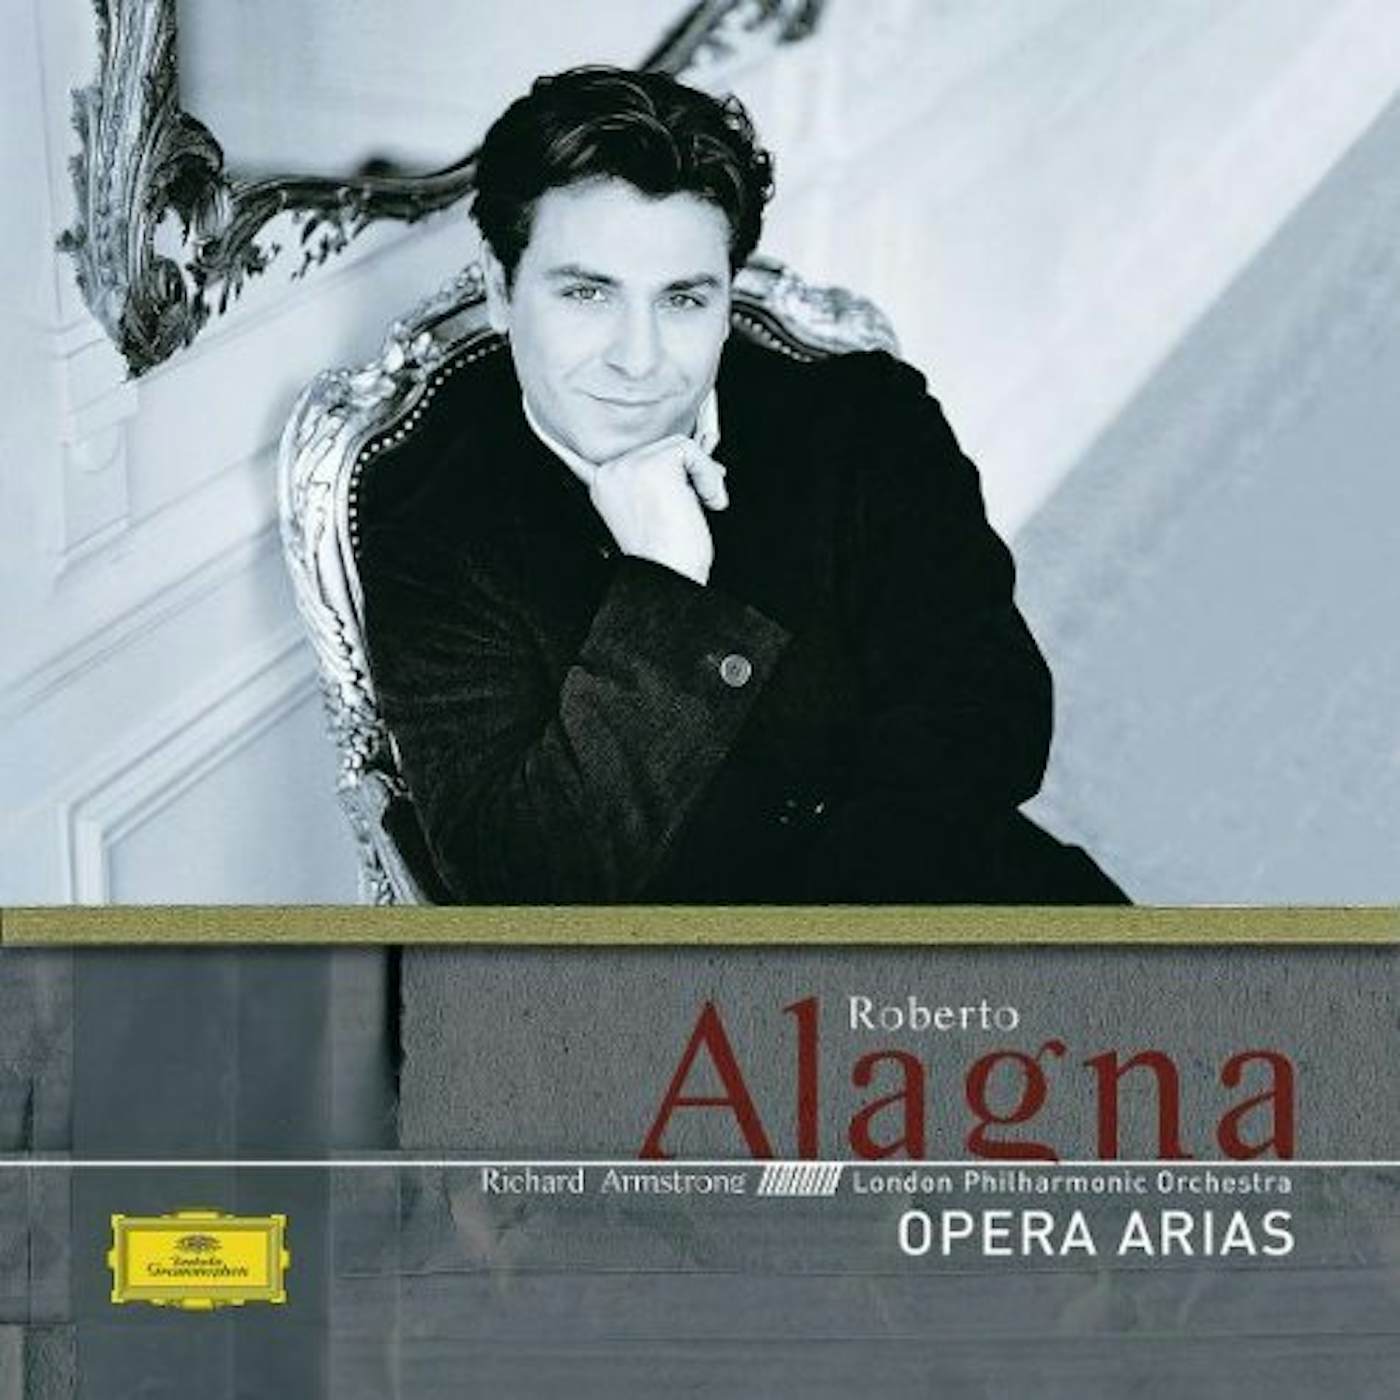 Roberto Alagna OPERA ARIAS CD